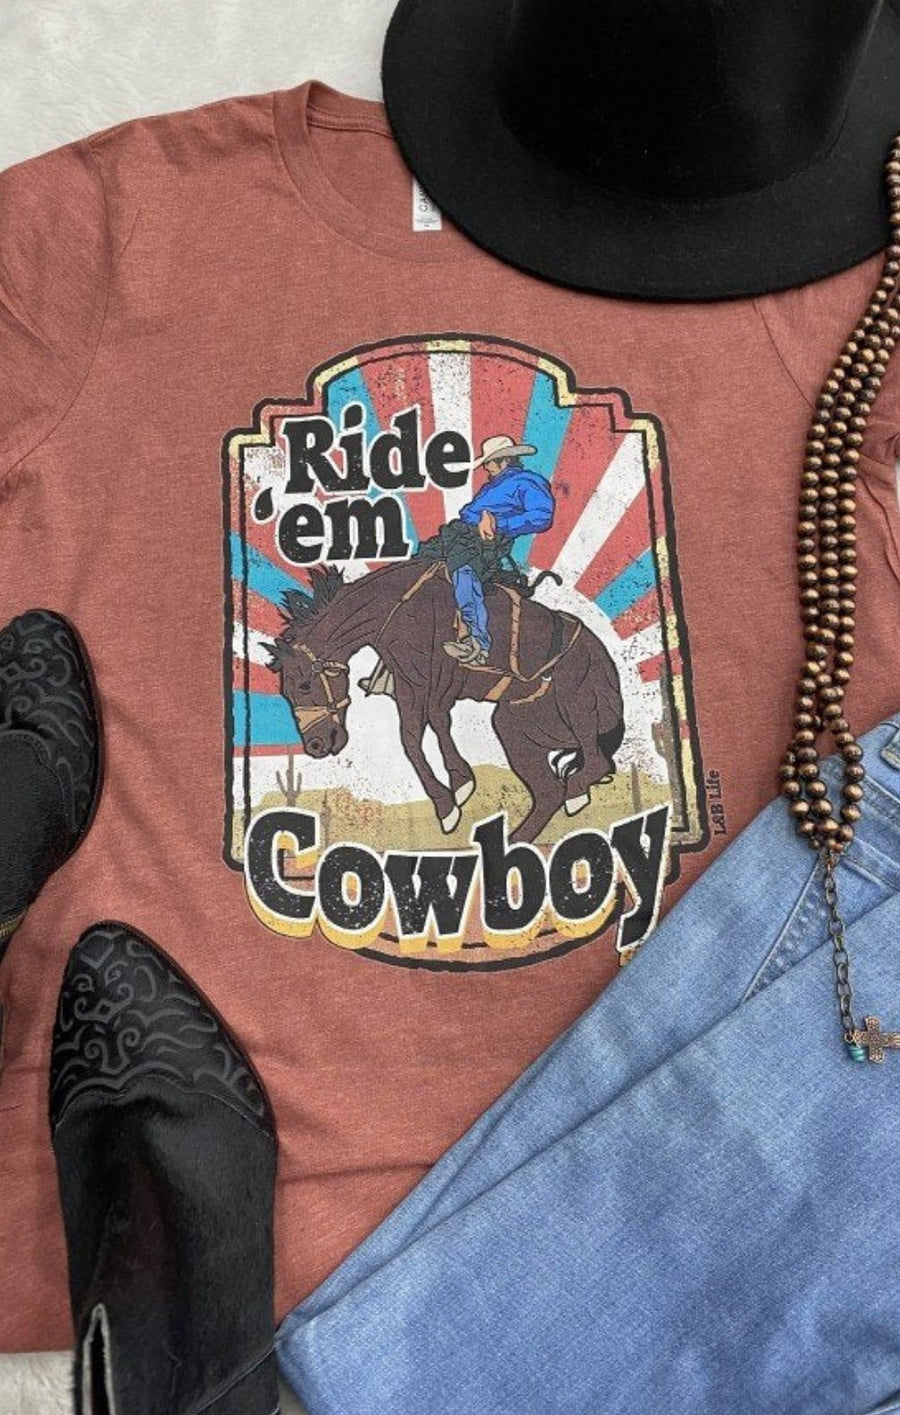 Ride em cowboy tee